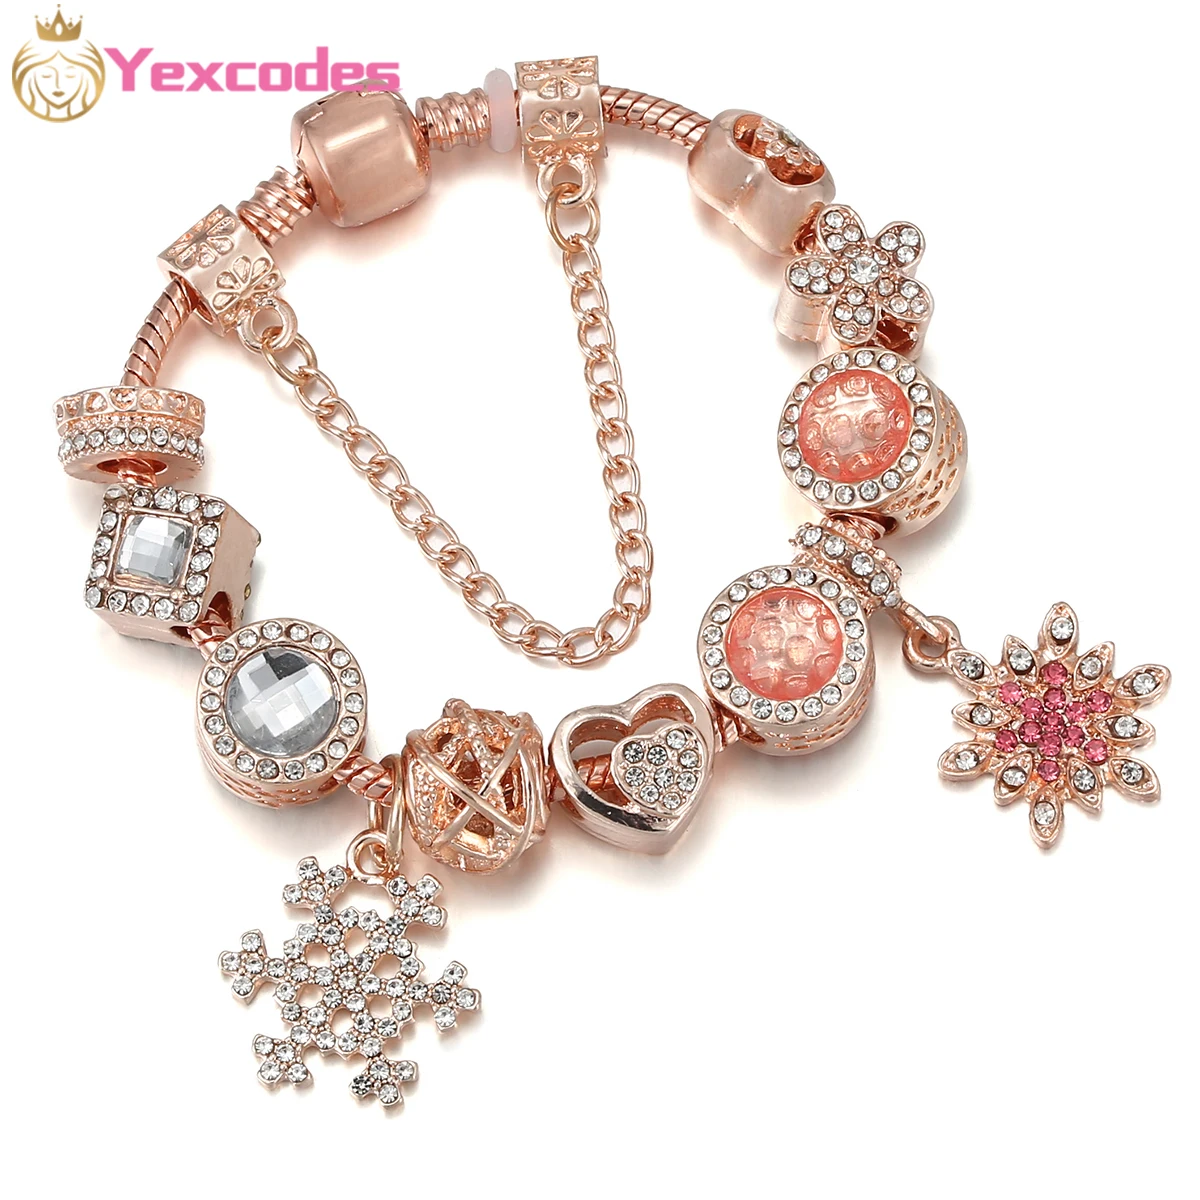 

Yexcodes European American Hot-selling Rose Gold Charm Bracelet Pink Snowflake Crystal Pendant DIY Brand Women Bracelet Gifts